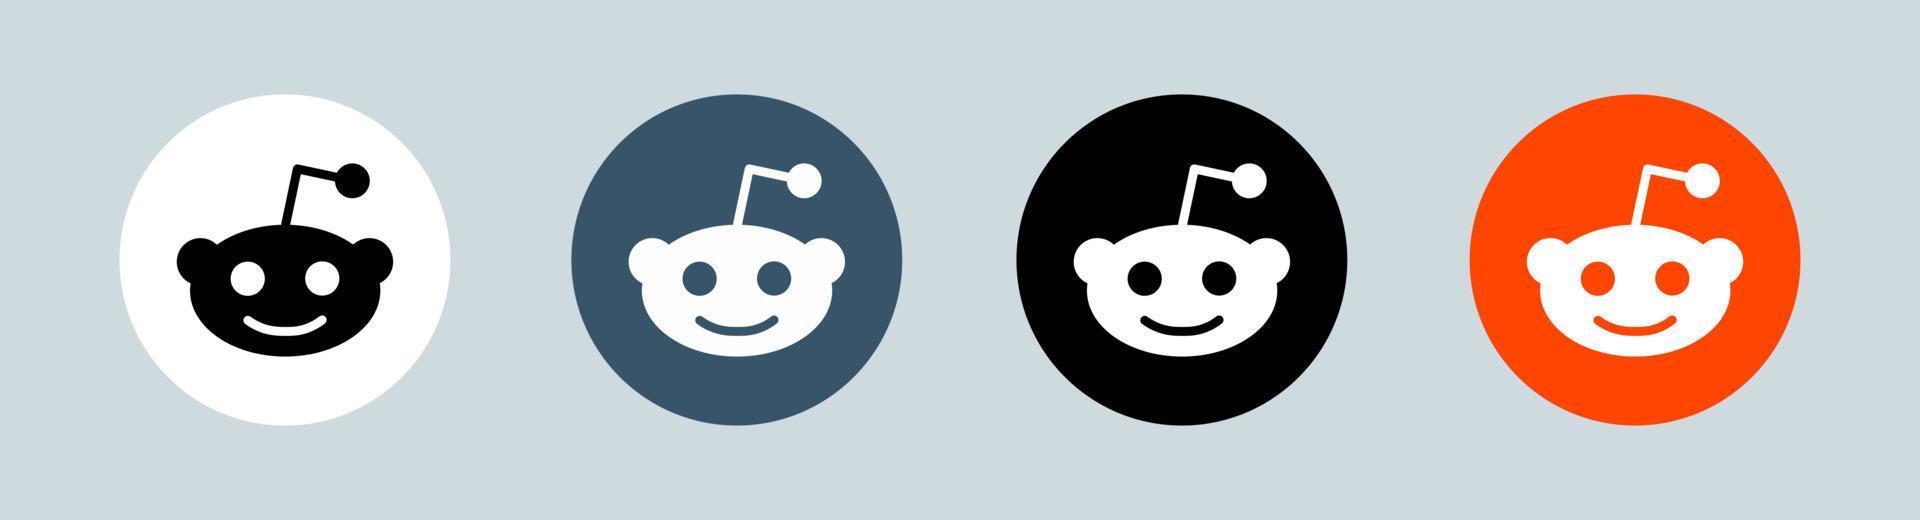 reddit-logo in cirkel. populaire sociale media logo vectorillustratie. vector